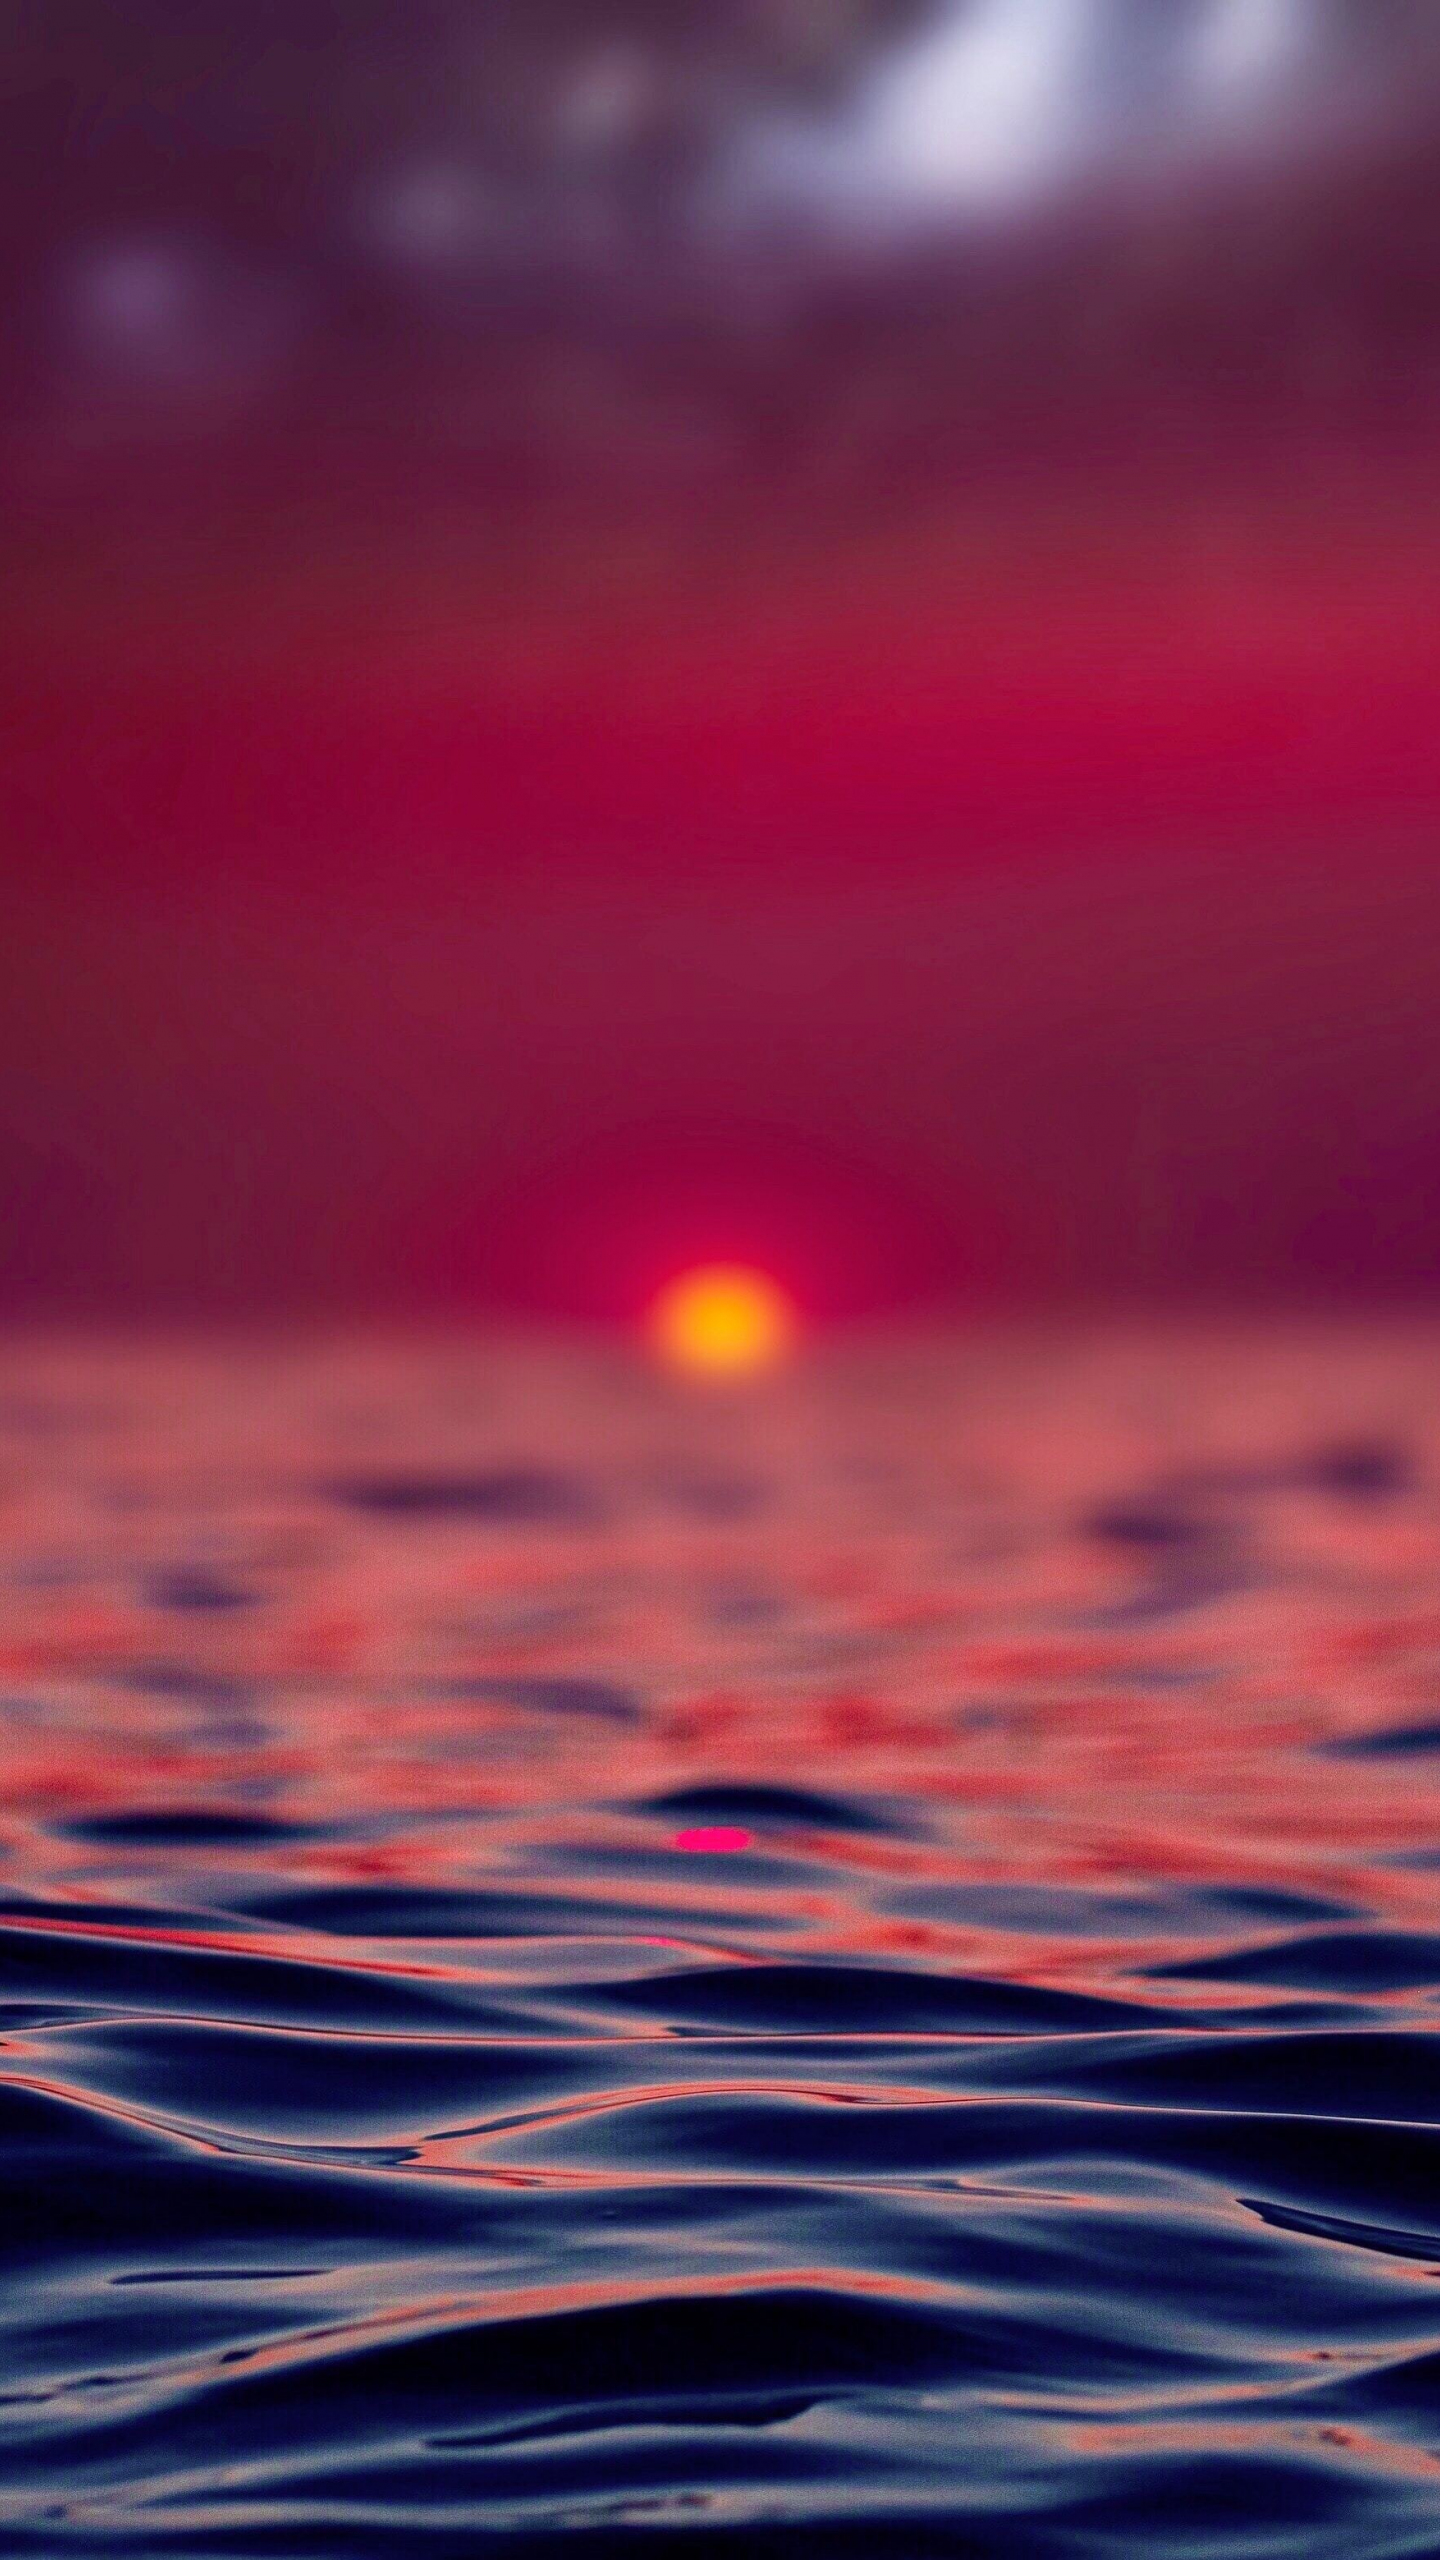 Download 1440x2560 Wallpaper Portrait Blur Sunset Seascape Qhd Samsung Galaxy S6 S7 Edge Note Lg G4 1440x2560 Hd Image Background